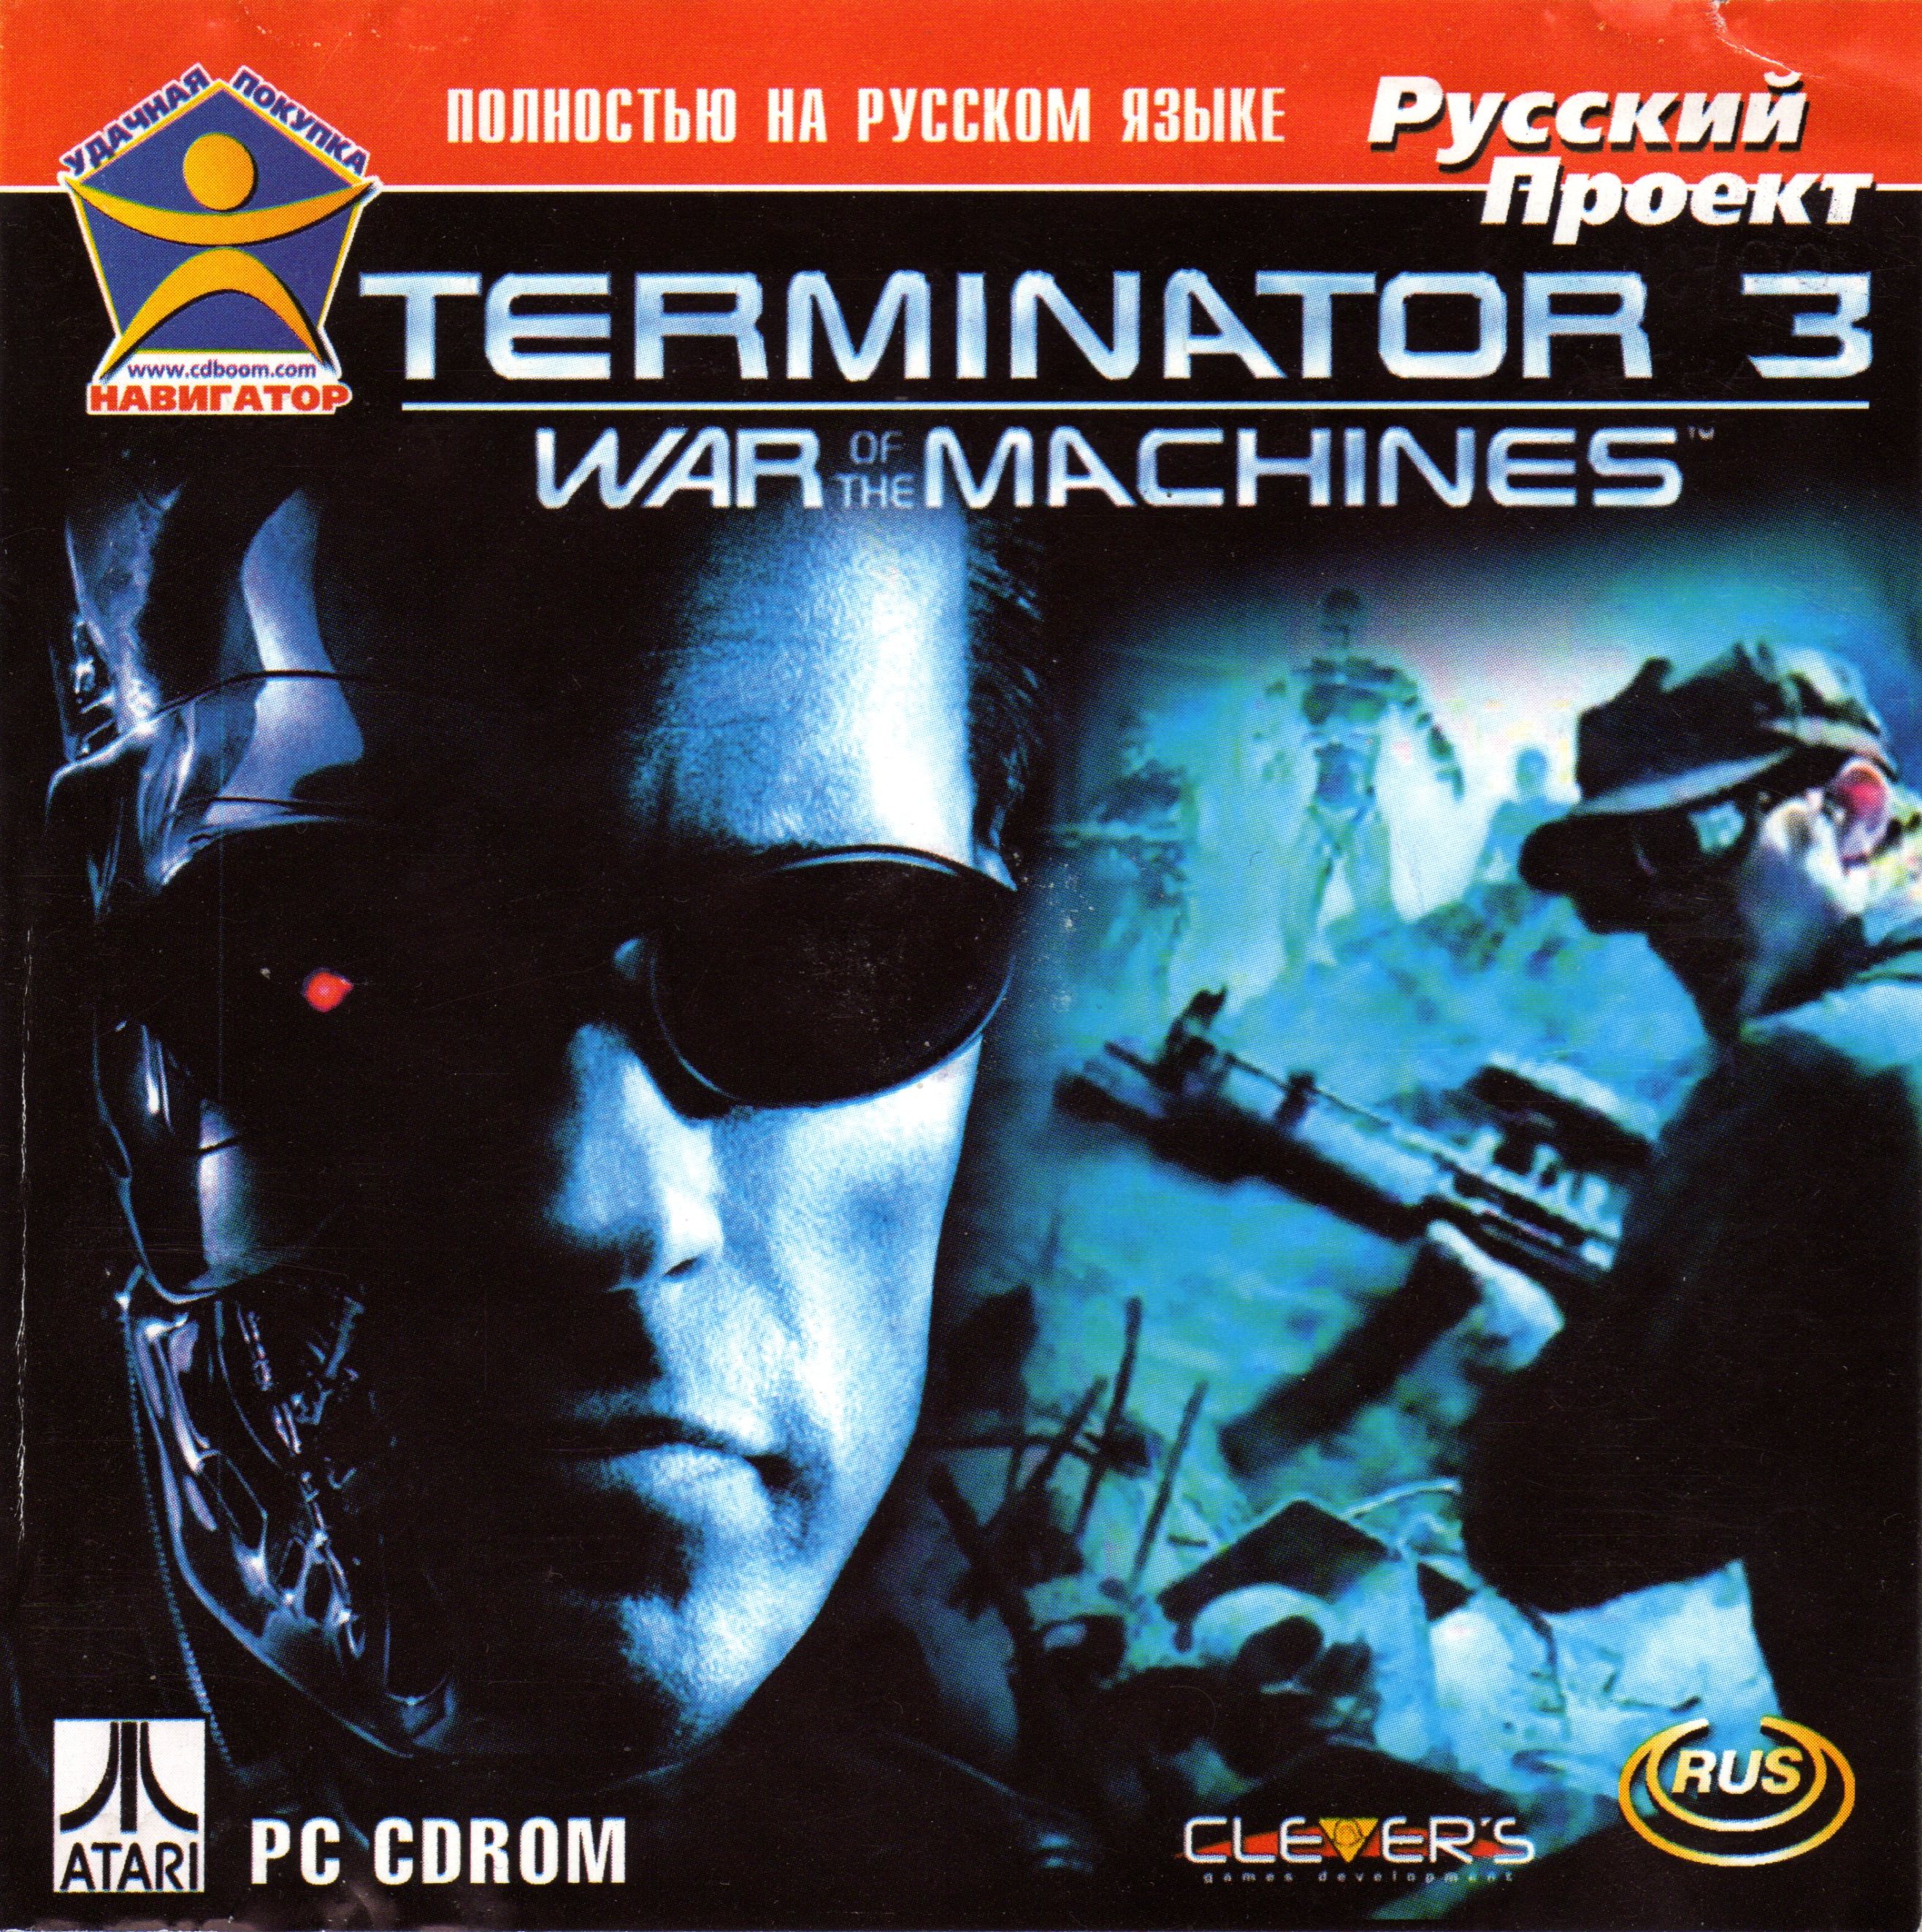 Терминатор машина игра. Terminator 3 обложка игра.